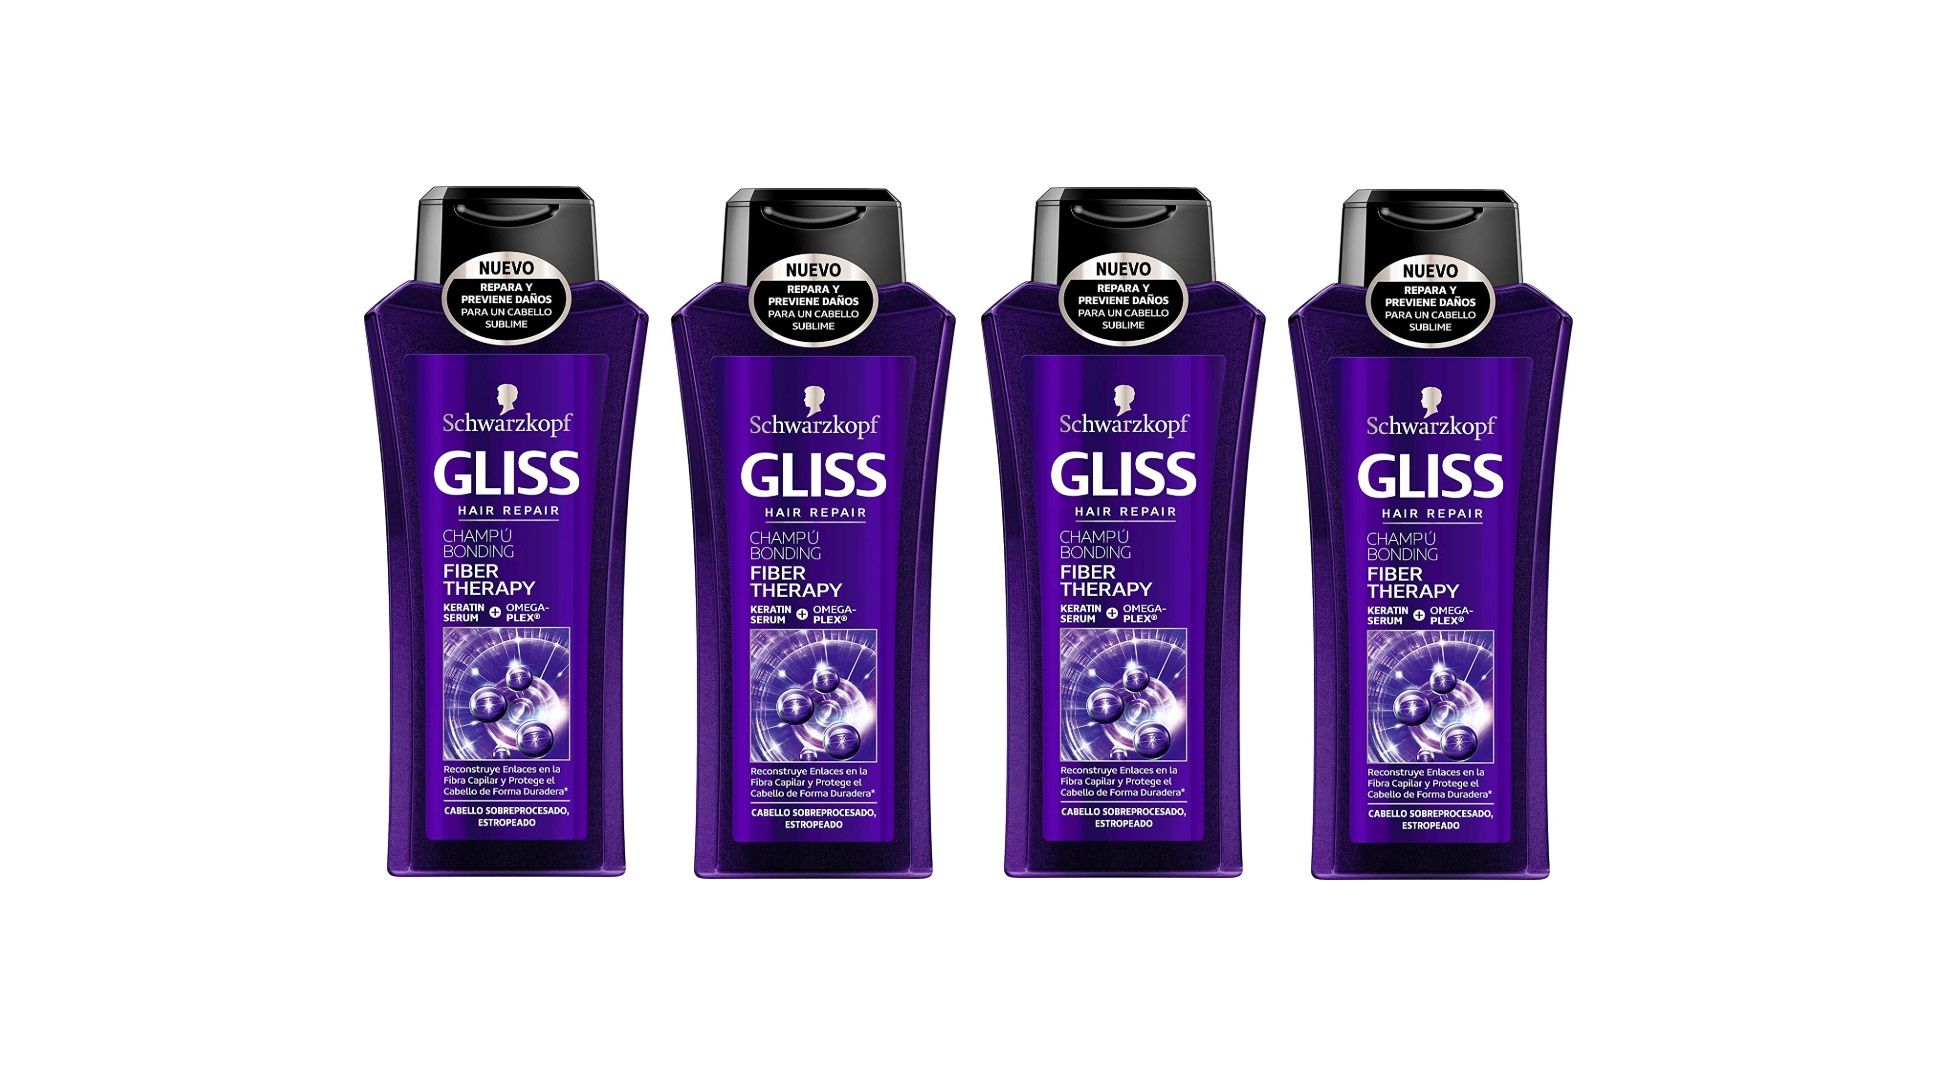 ¡Chollo! Pack de 4 champús fiber Therapy de Gliss por sólo 9€ (antes 13€)